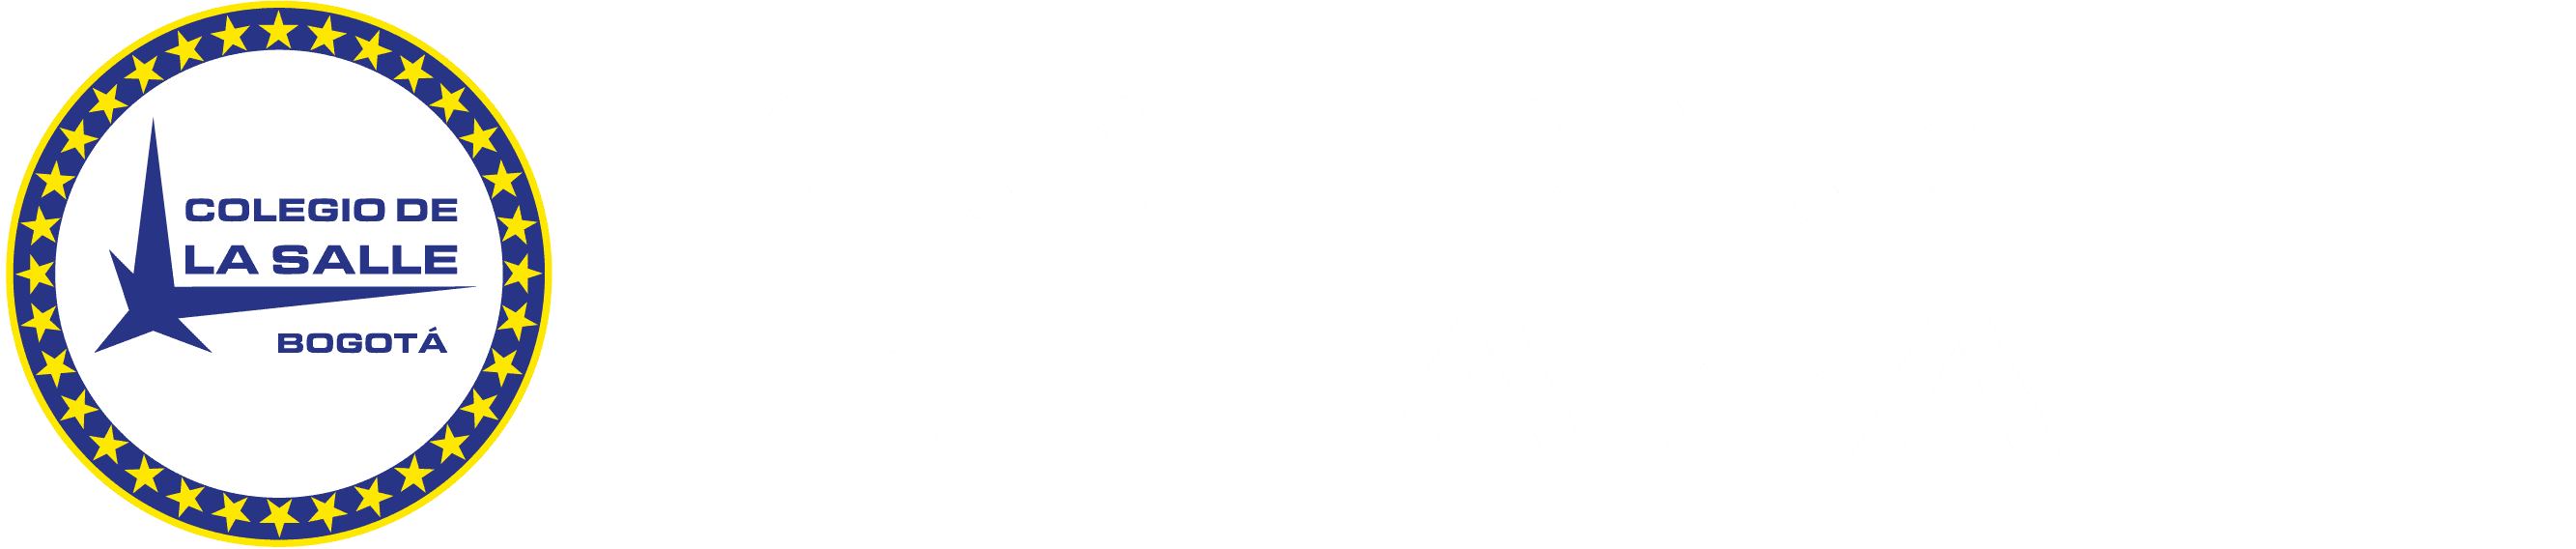 COLEGIO DE LA SALLE|Jardines BOGOTA|Jardines COLOMBIA